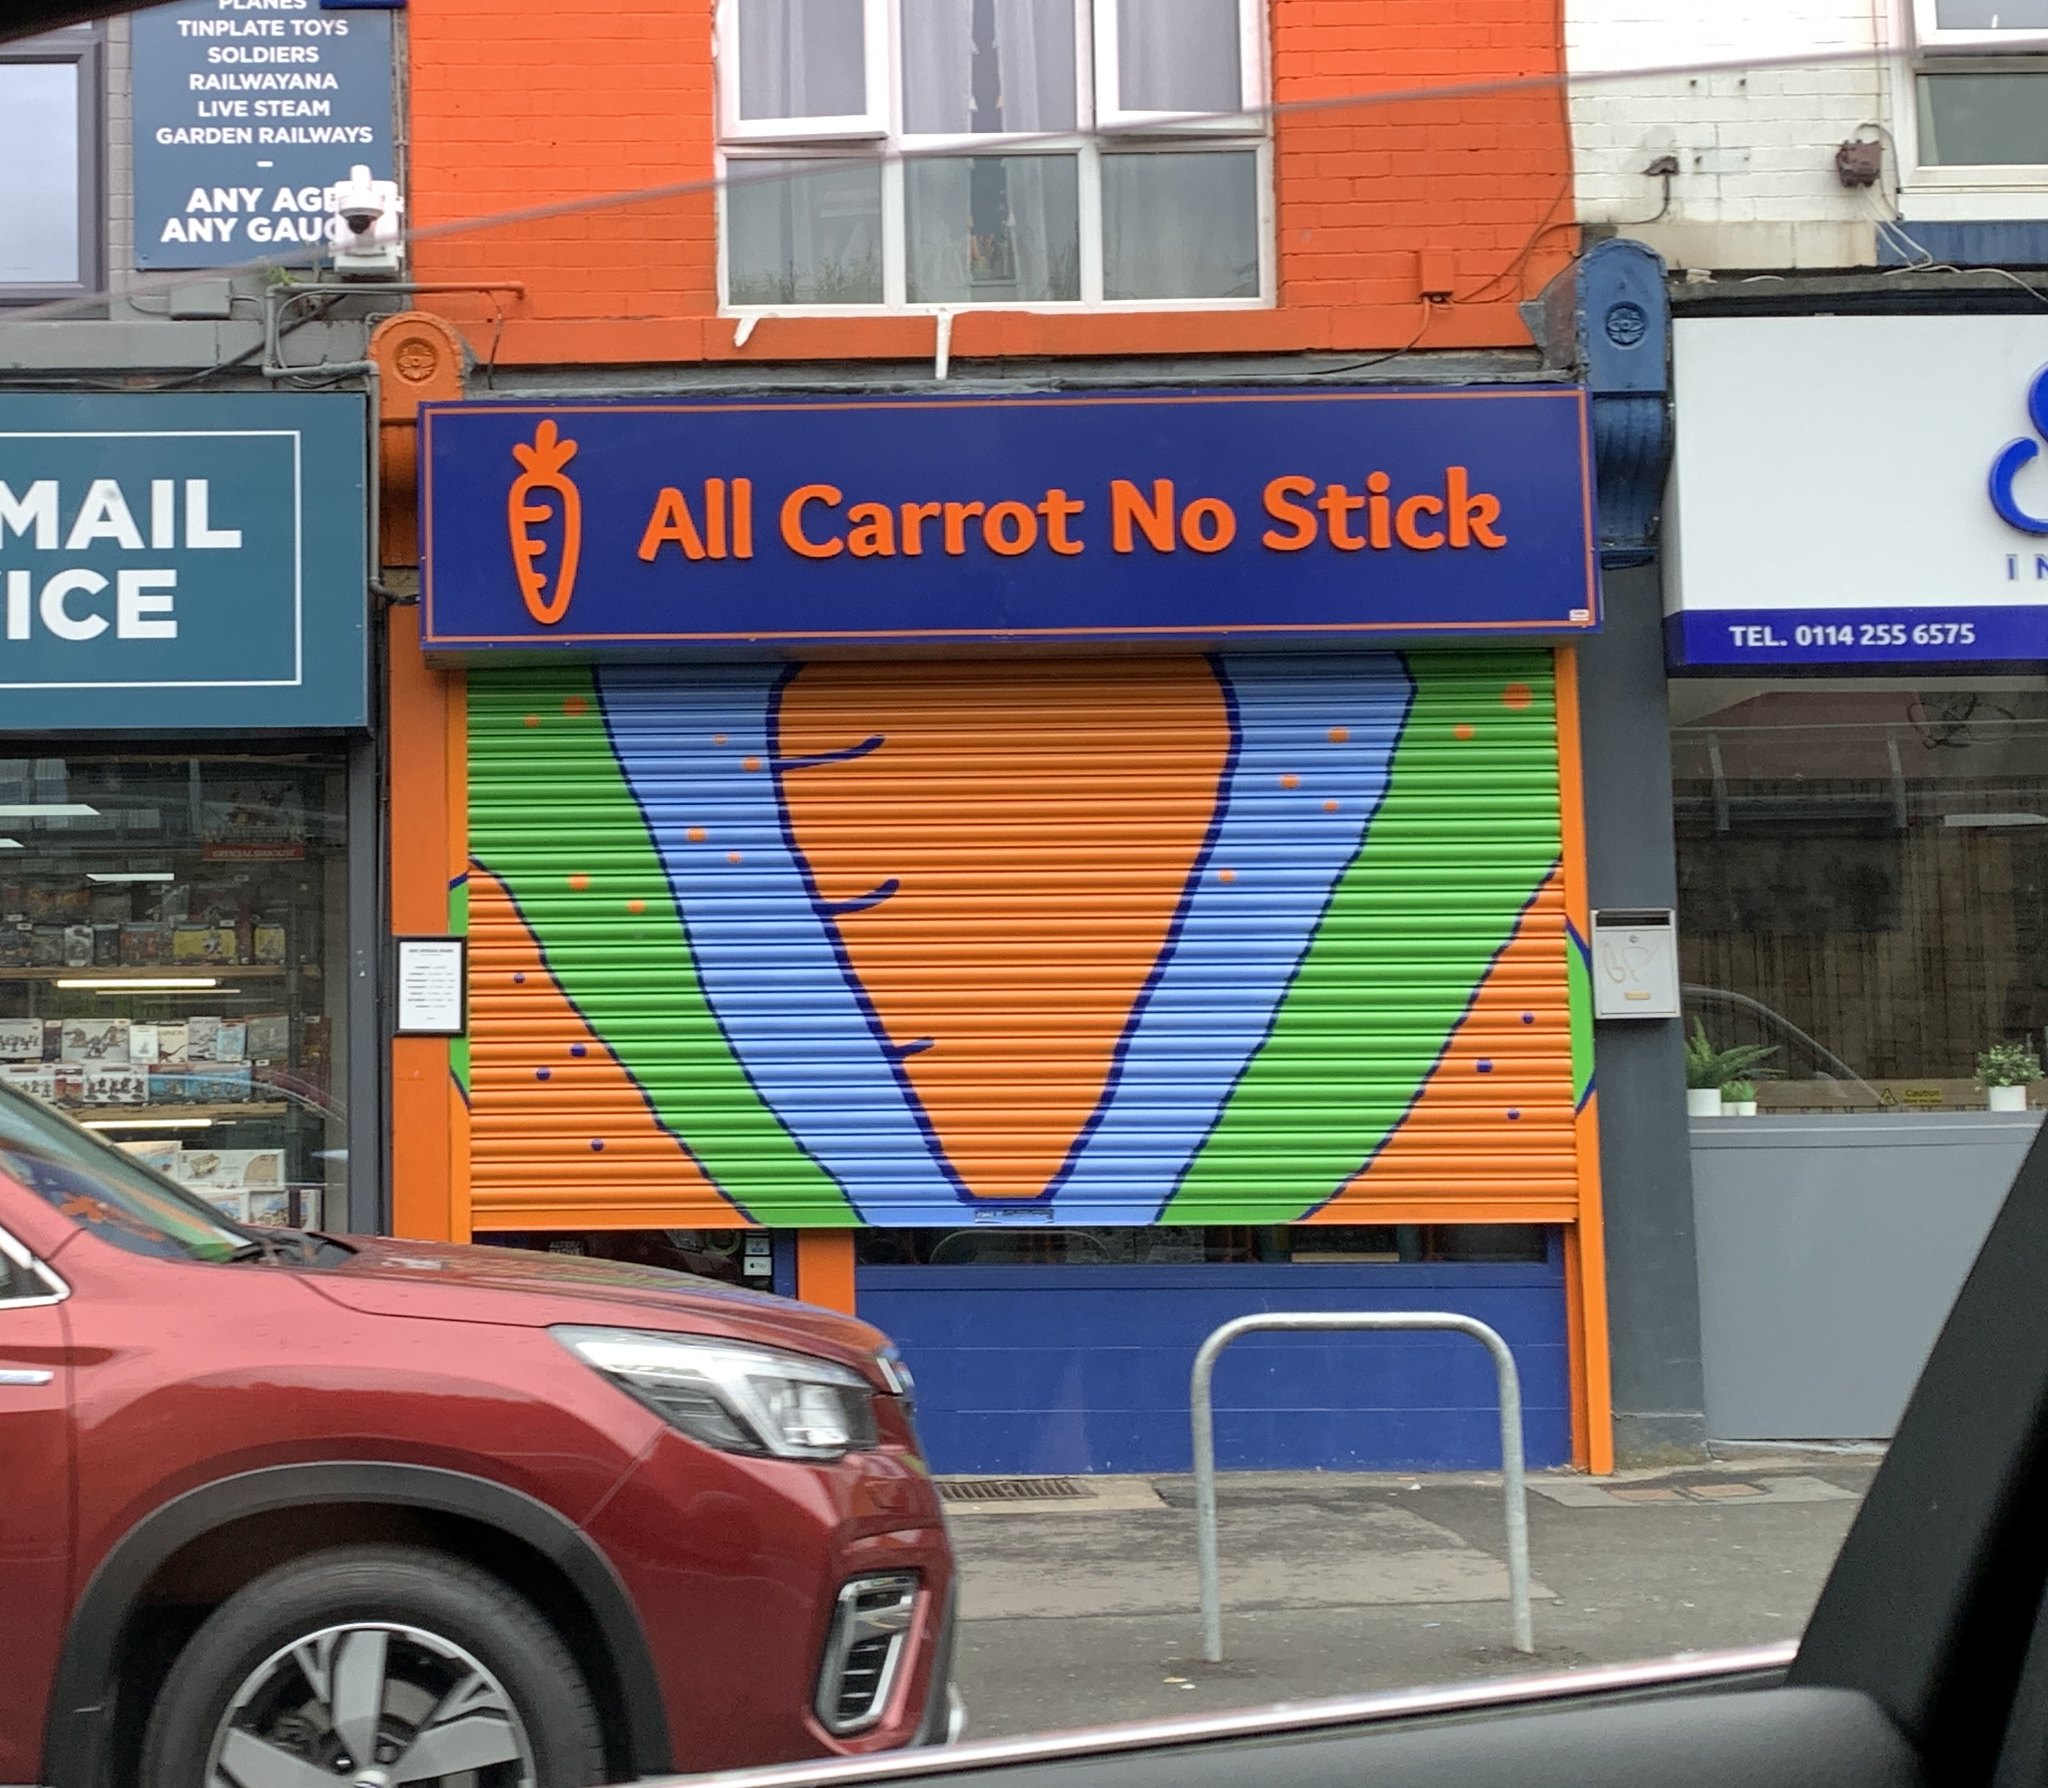 All carrot no stick